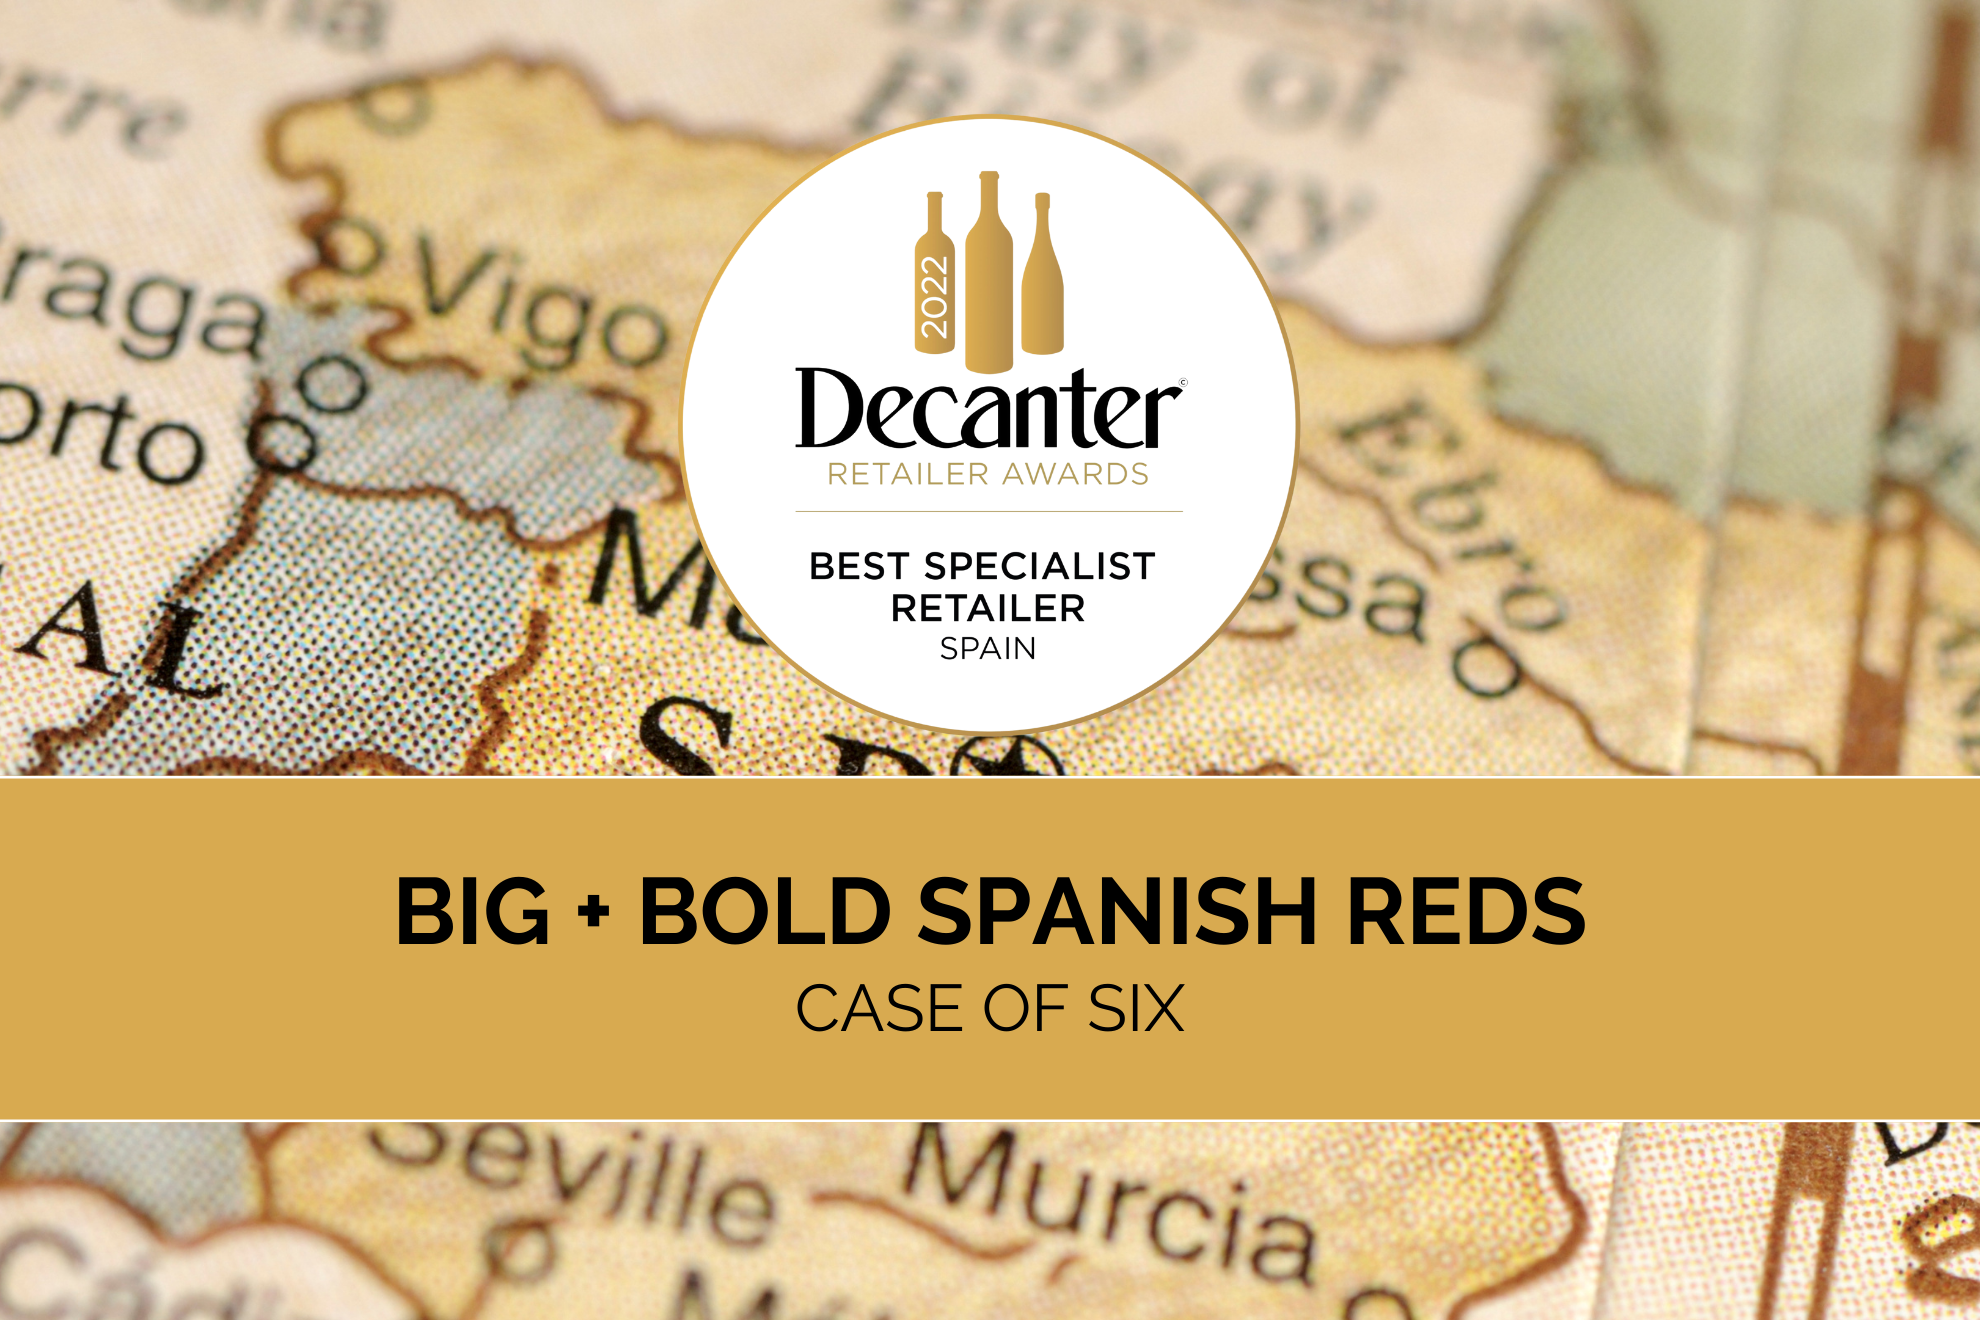 Big + Bold Spanish Reds - Case of Six